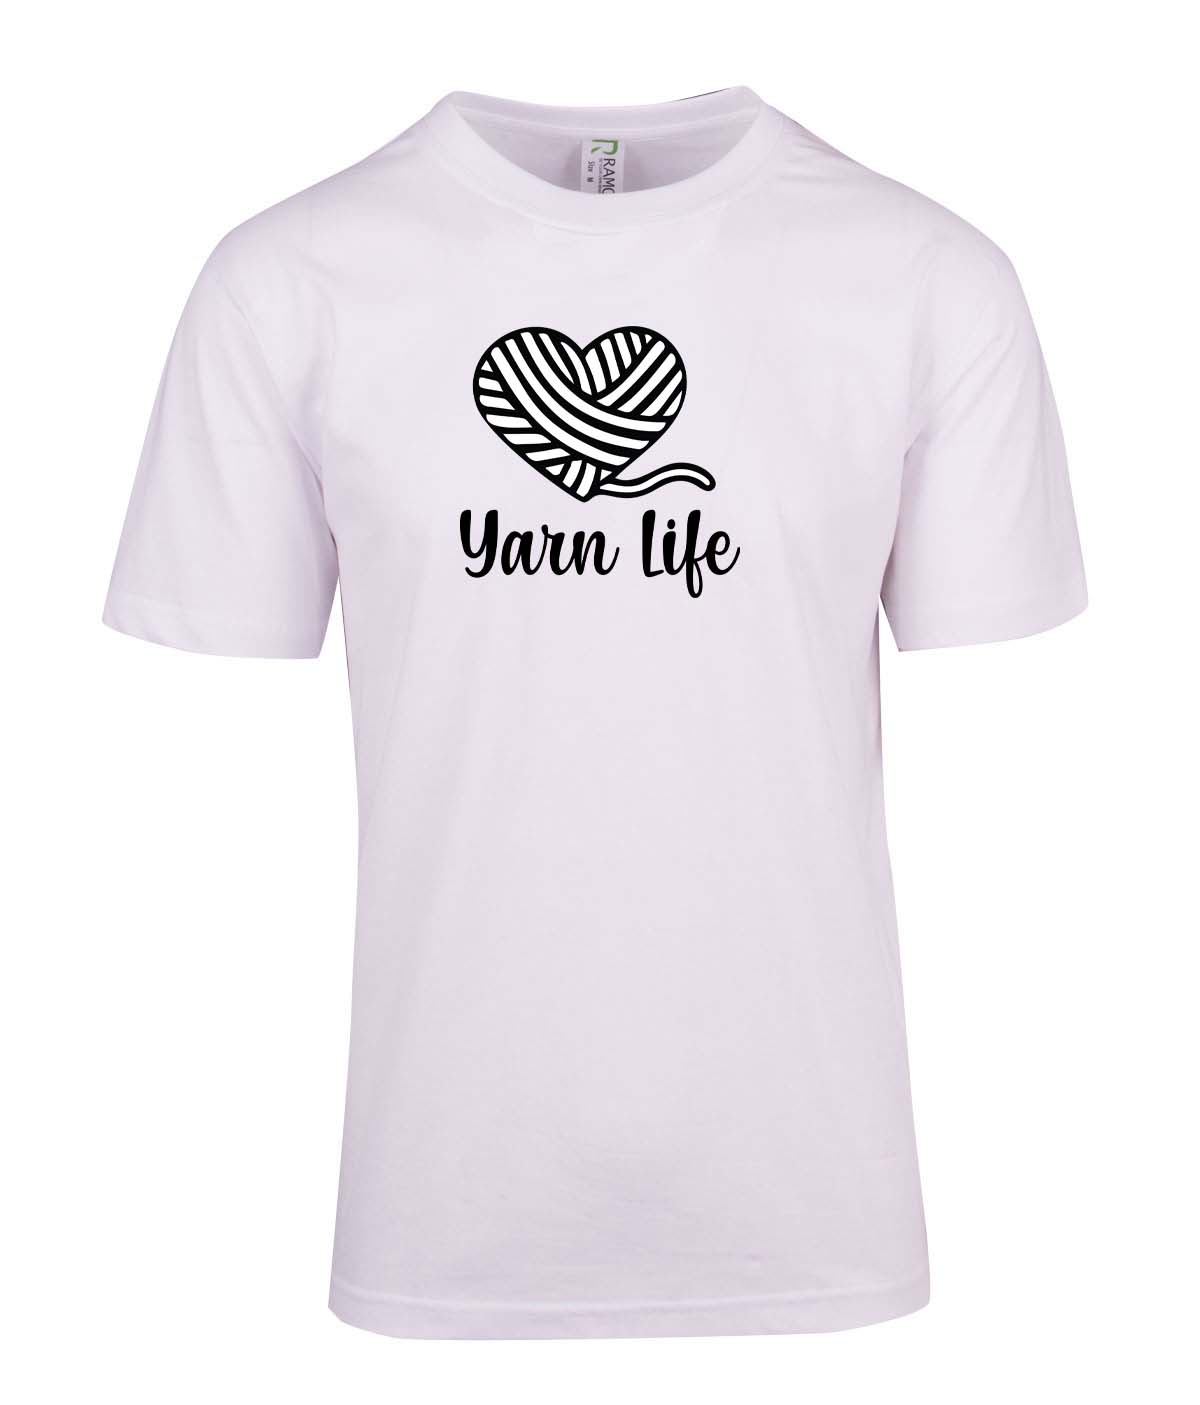 Yarn Life crochet T-Shirt